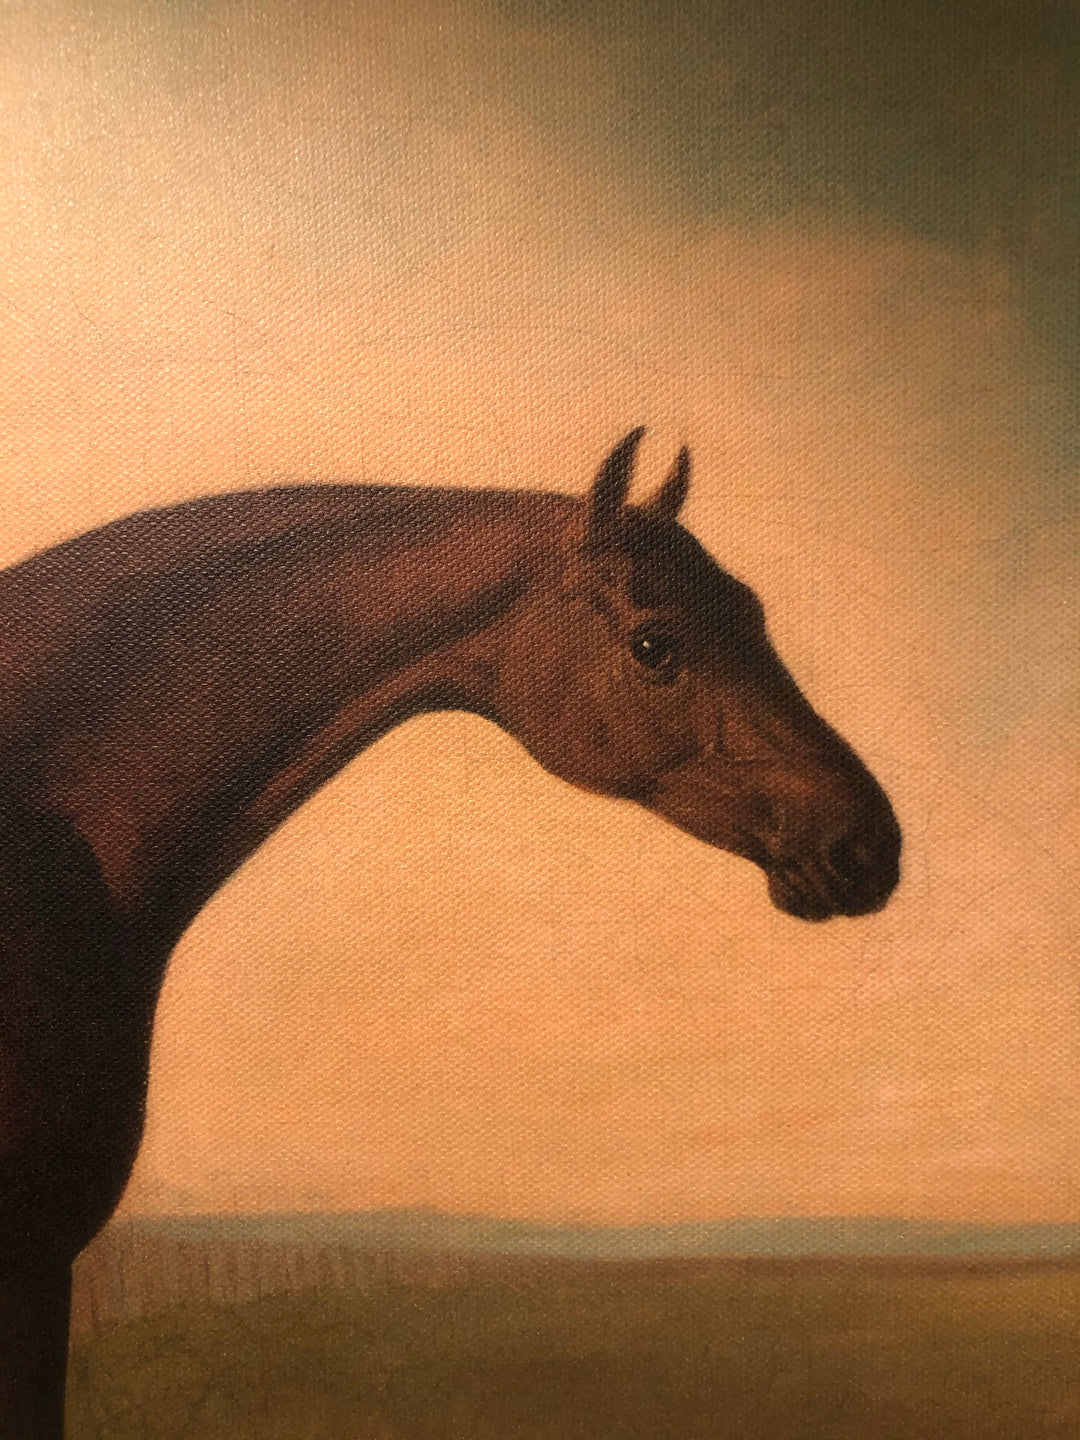 Boultbee : A Bay Horse In a Field